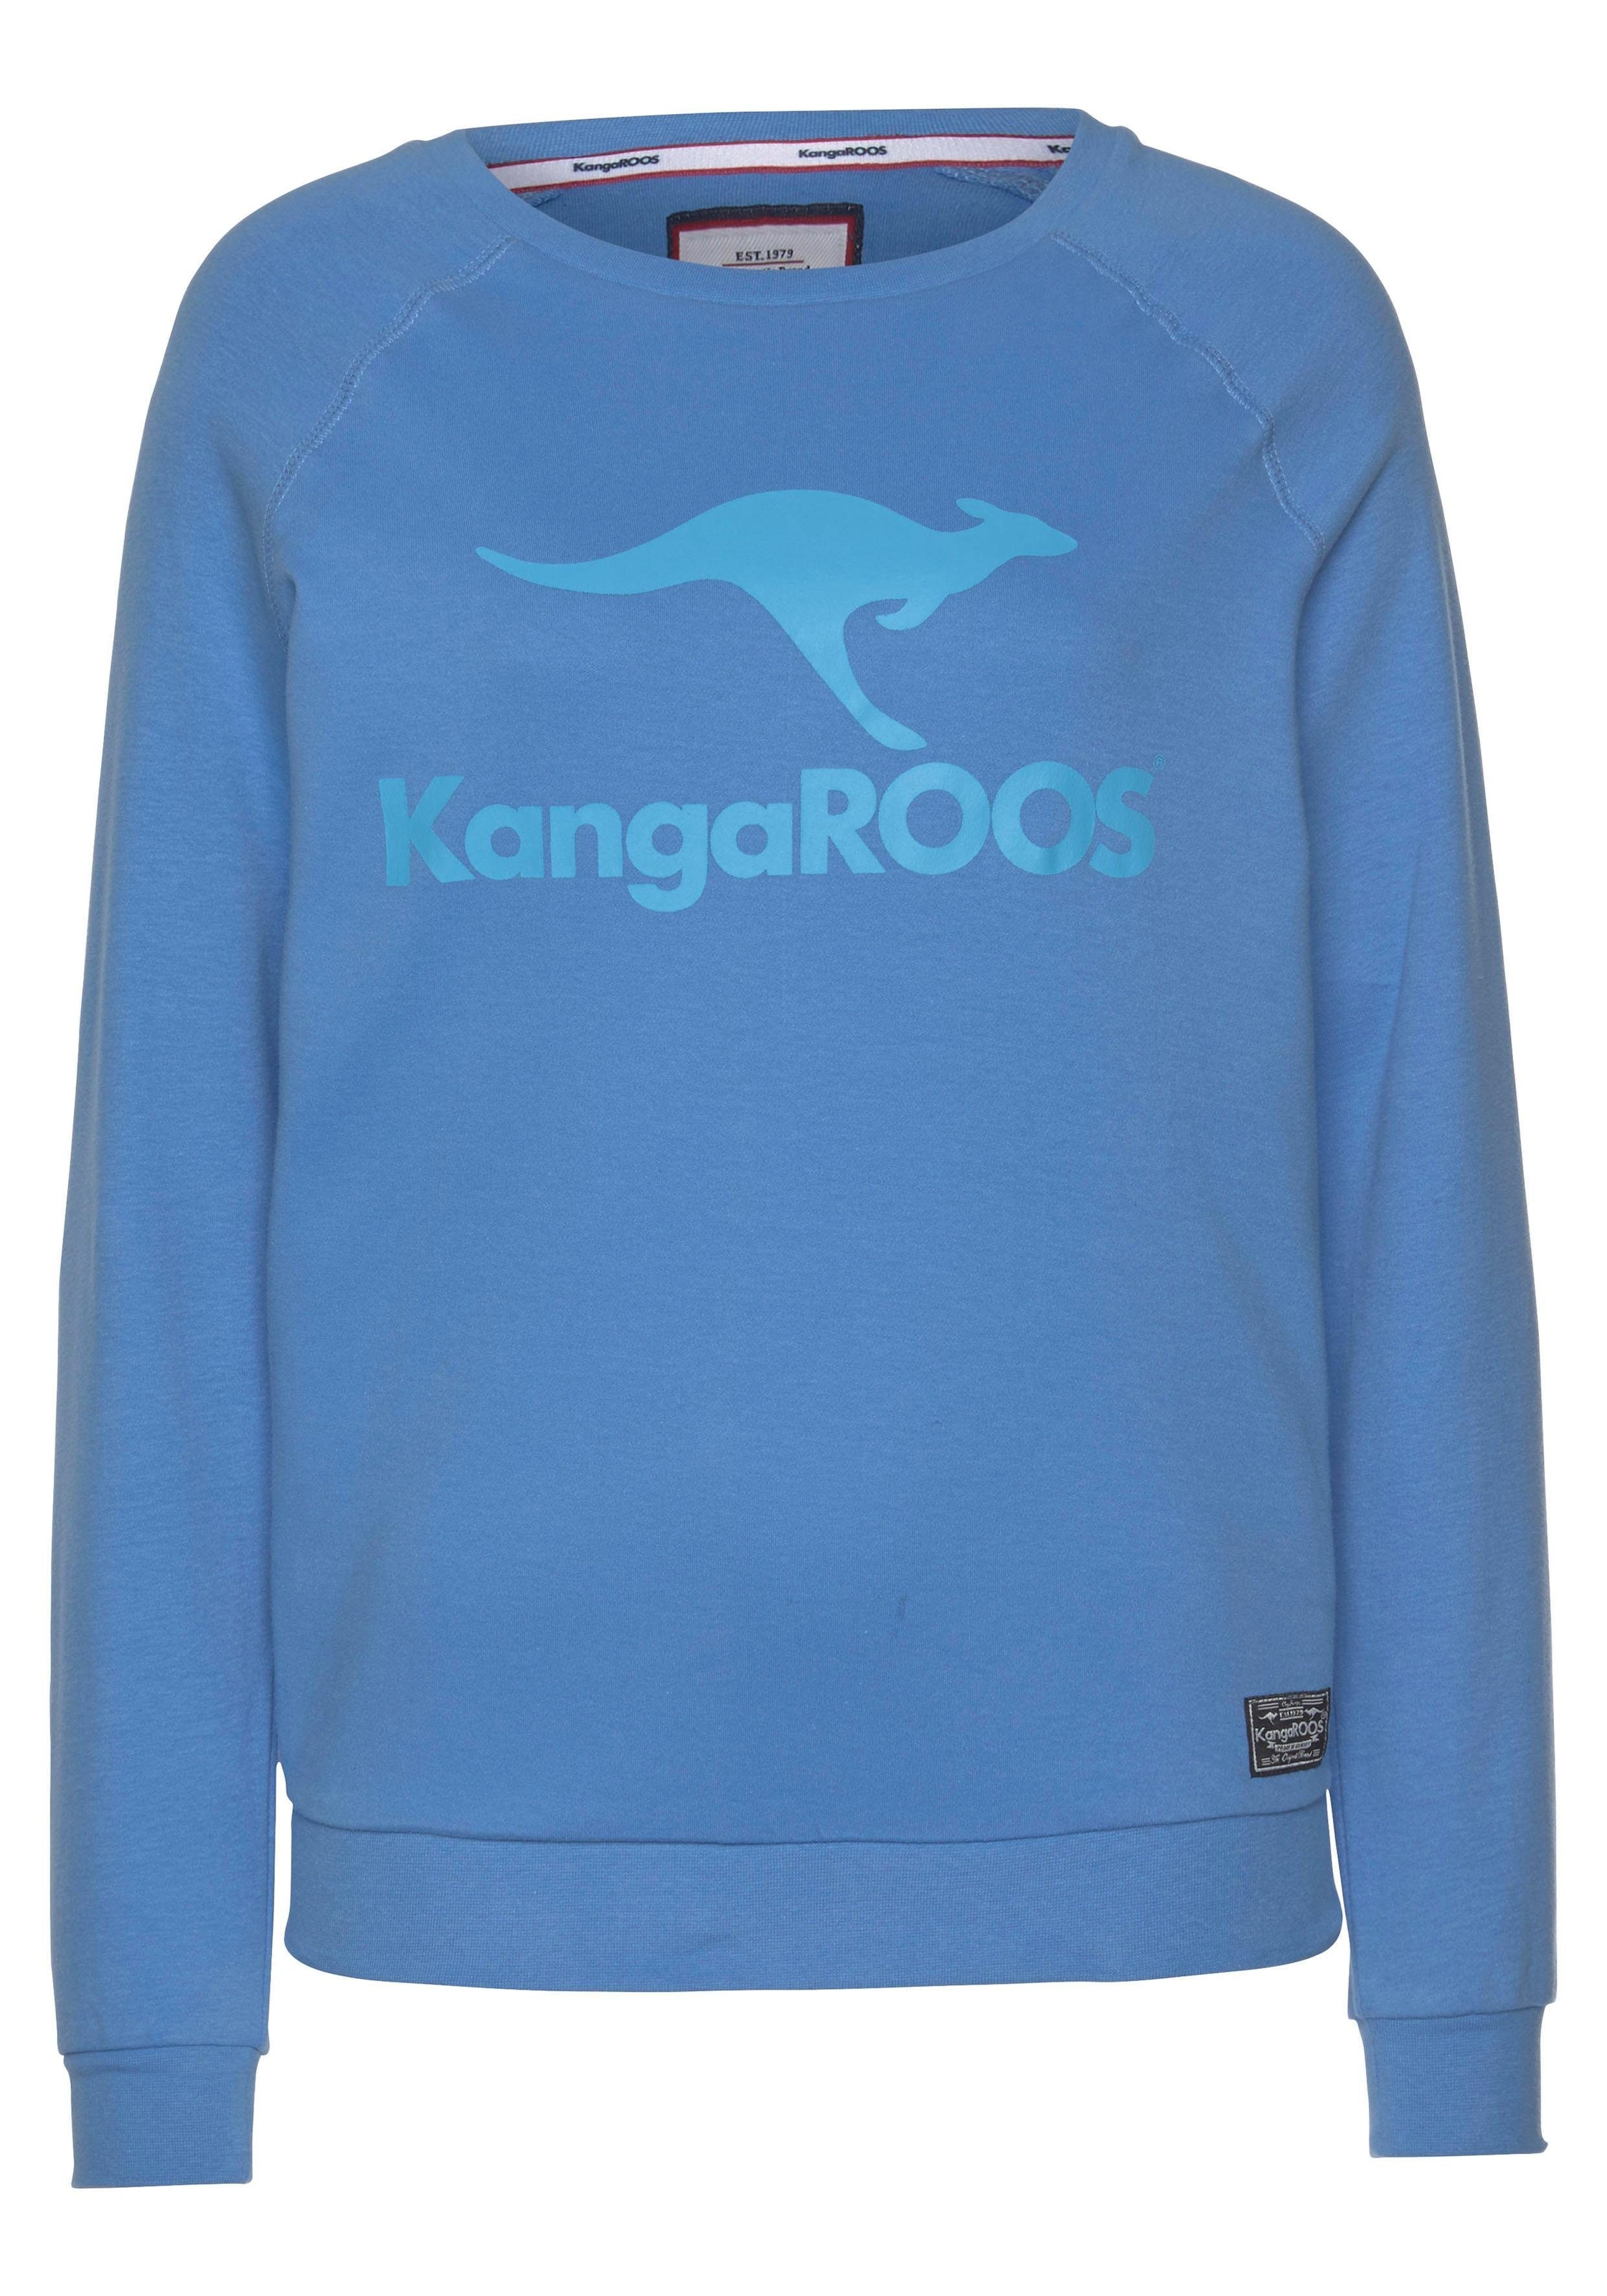 KangaROOS Sweater, mit großem ♕ Label-Print bei vorne